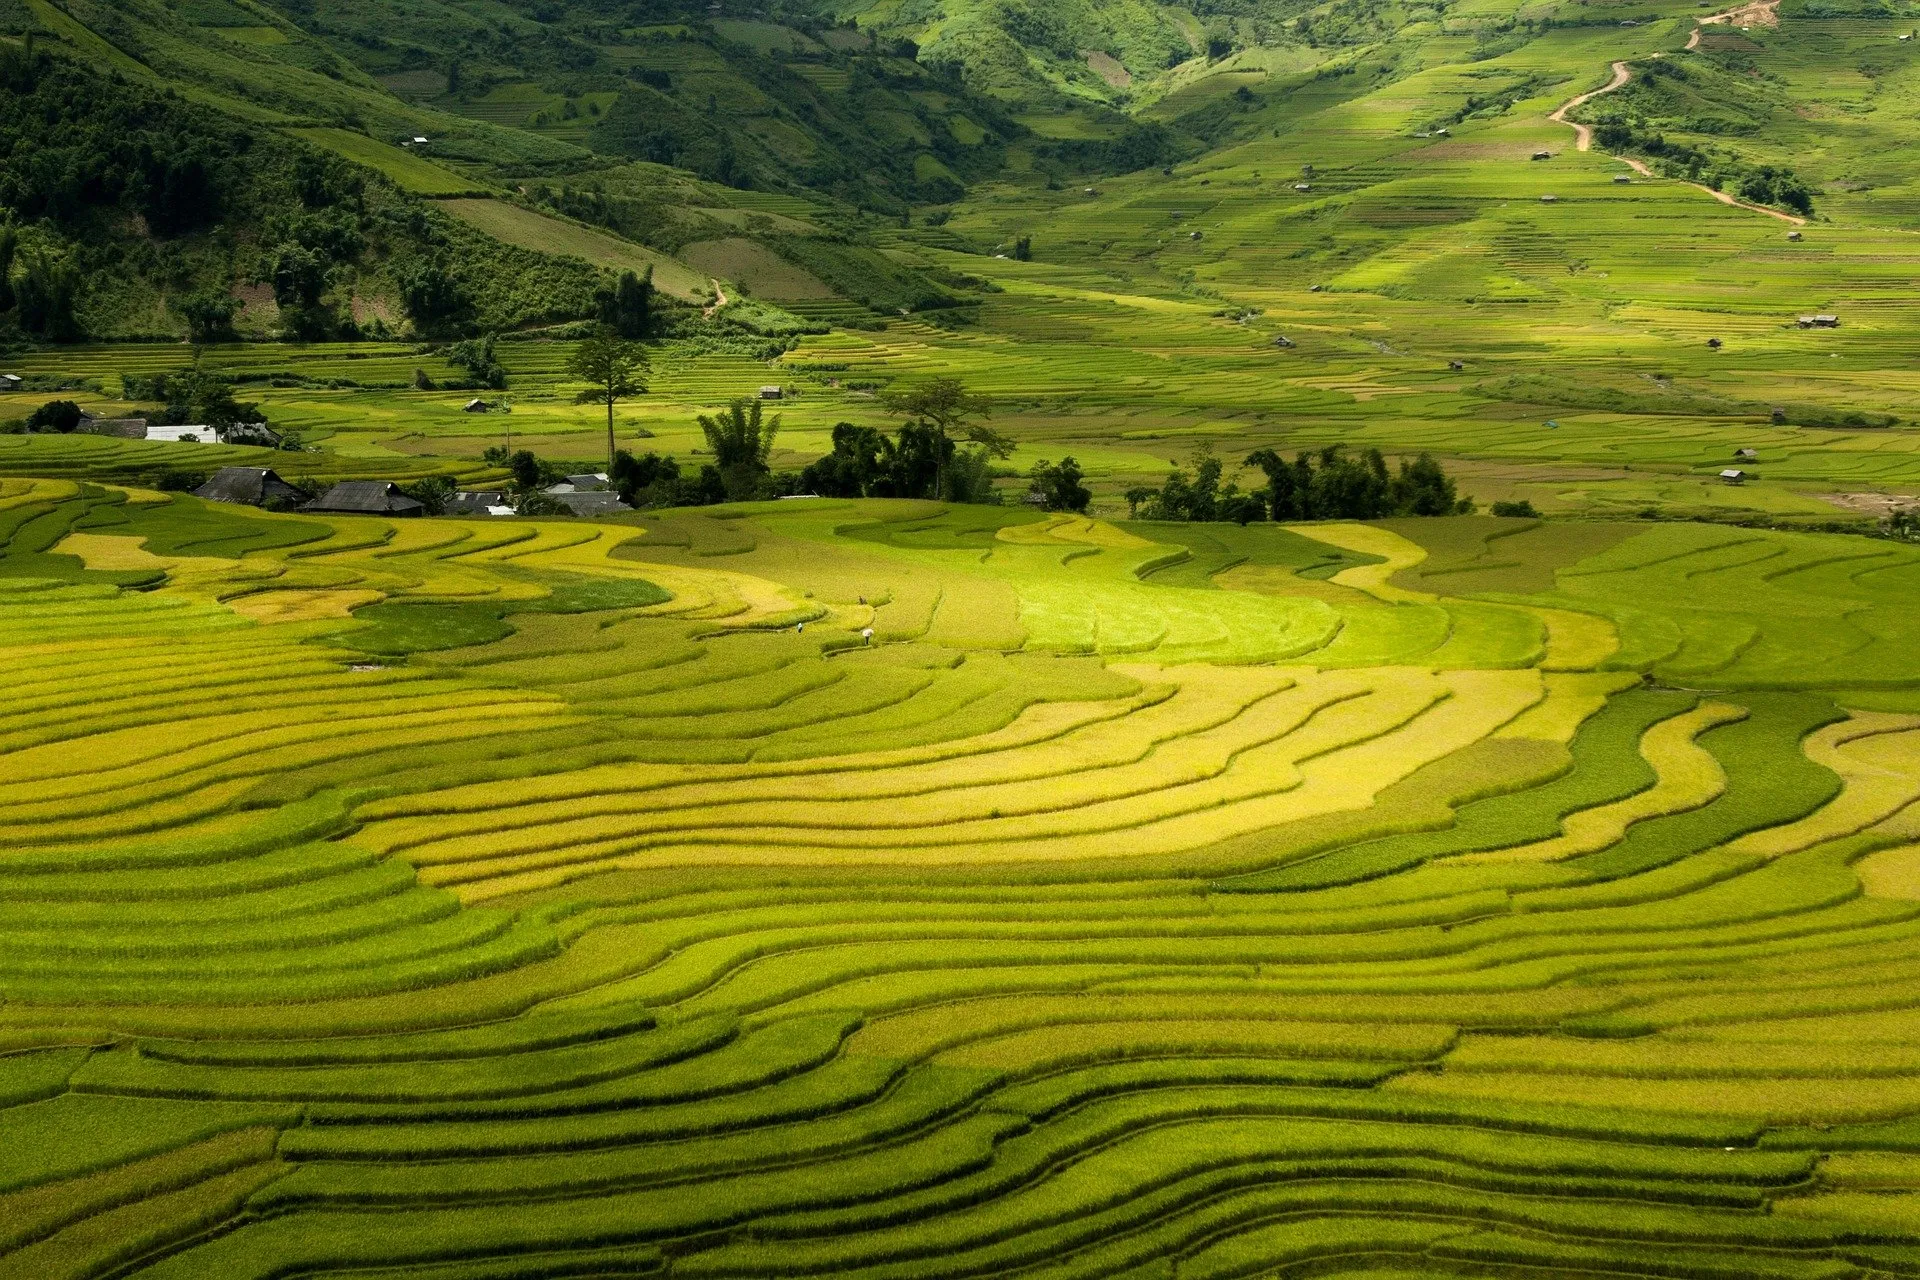 Rice fields in Mu Cang Chai